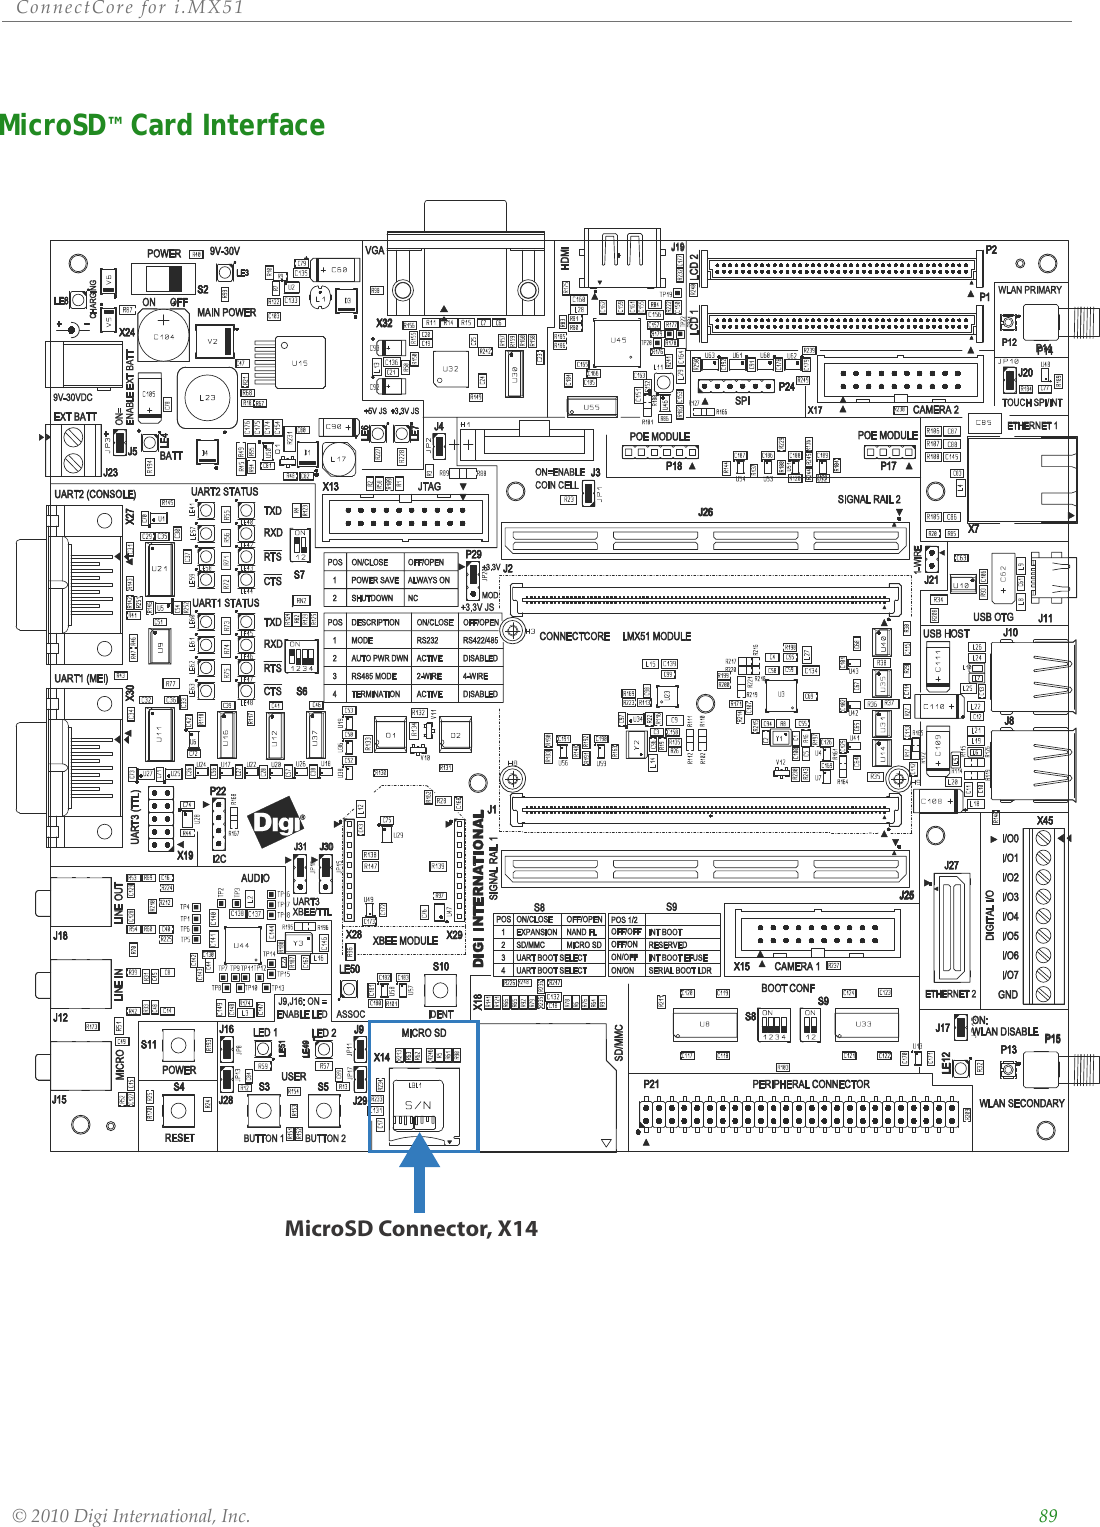 ConnectCorefori.MX51©2010DigiInternational,Inc. 89MicroSD™ Card Interface  MicroSD Connector, X14